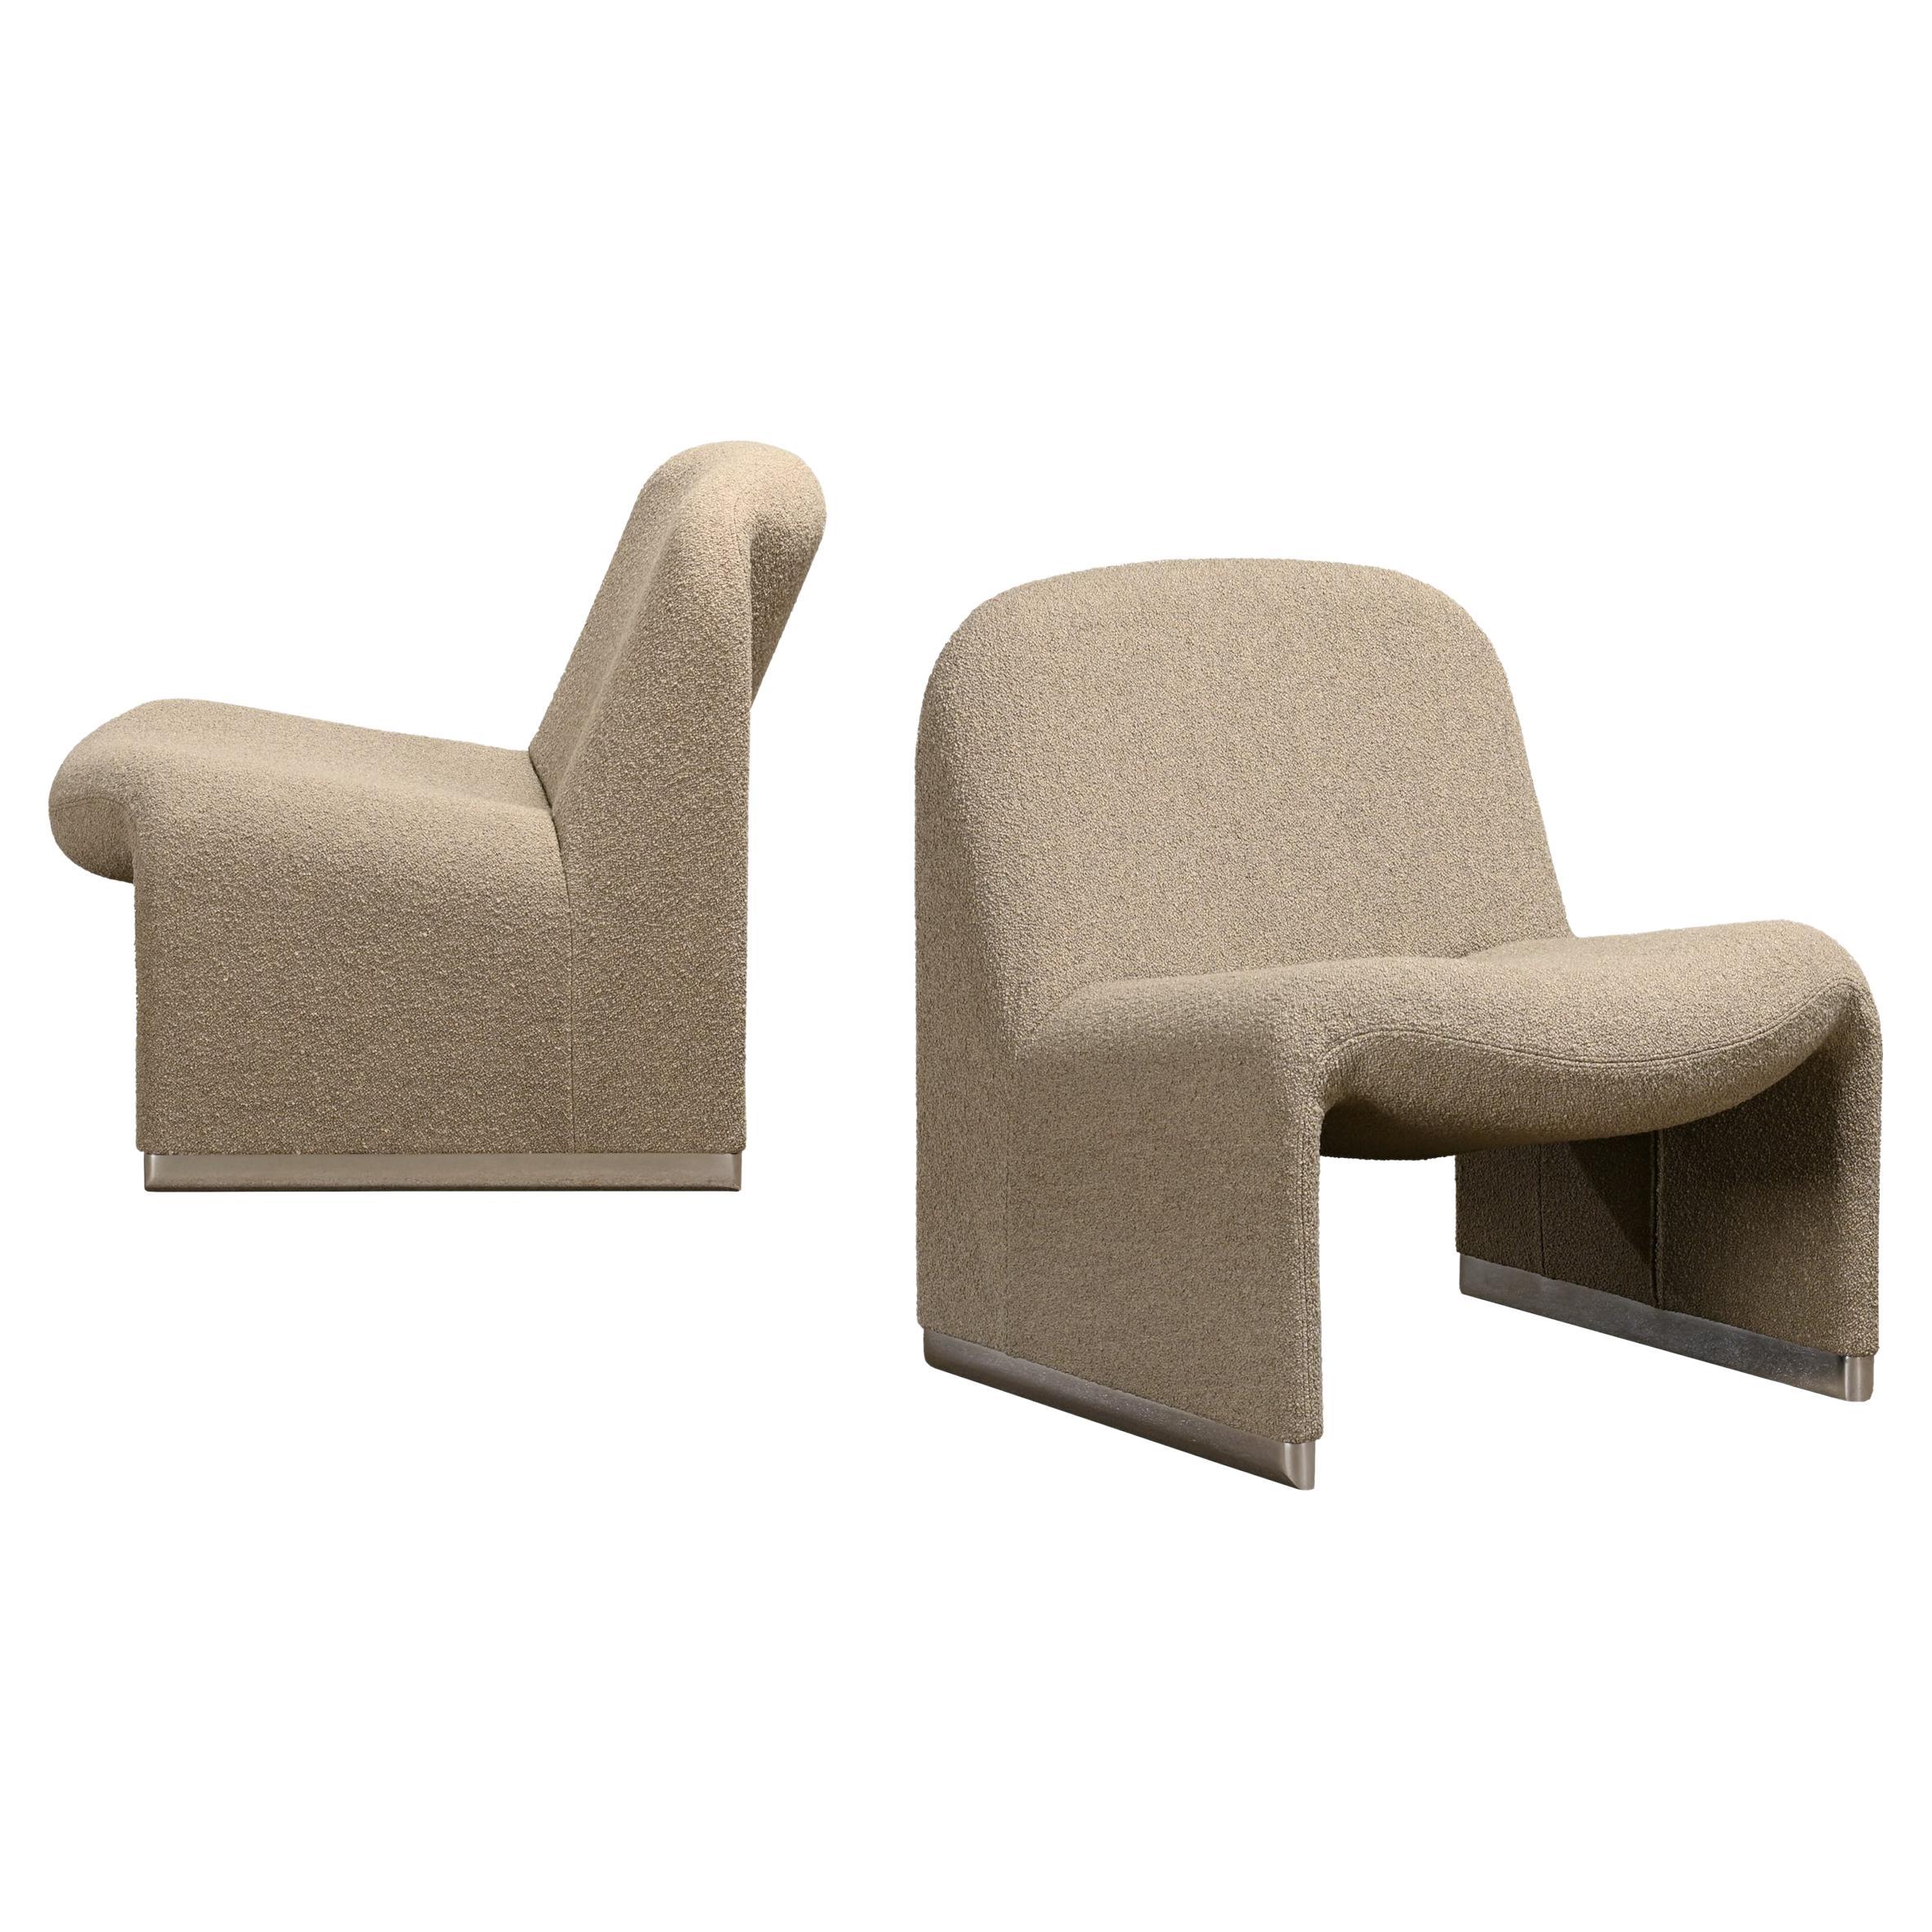 Giancarlo Piretti Alky Lounge Chair aus Bouclé-Wolle in Steingrau, Anonima Castelli